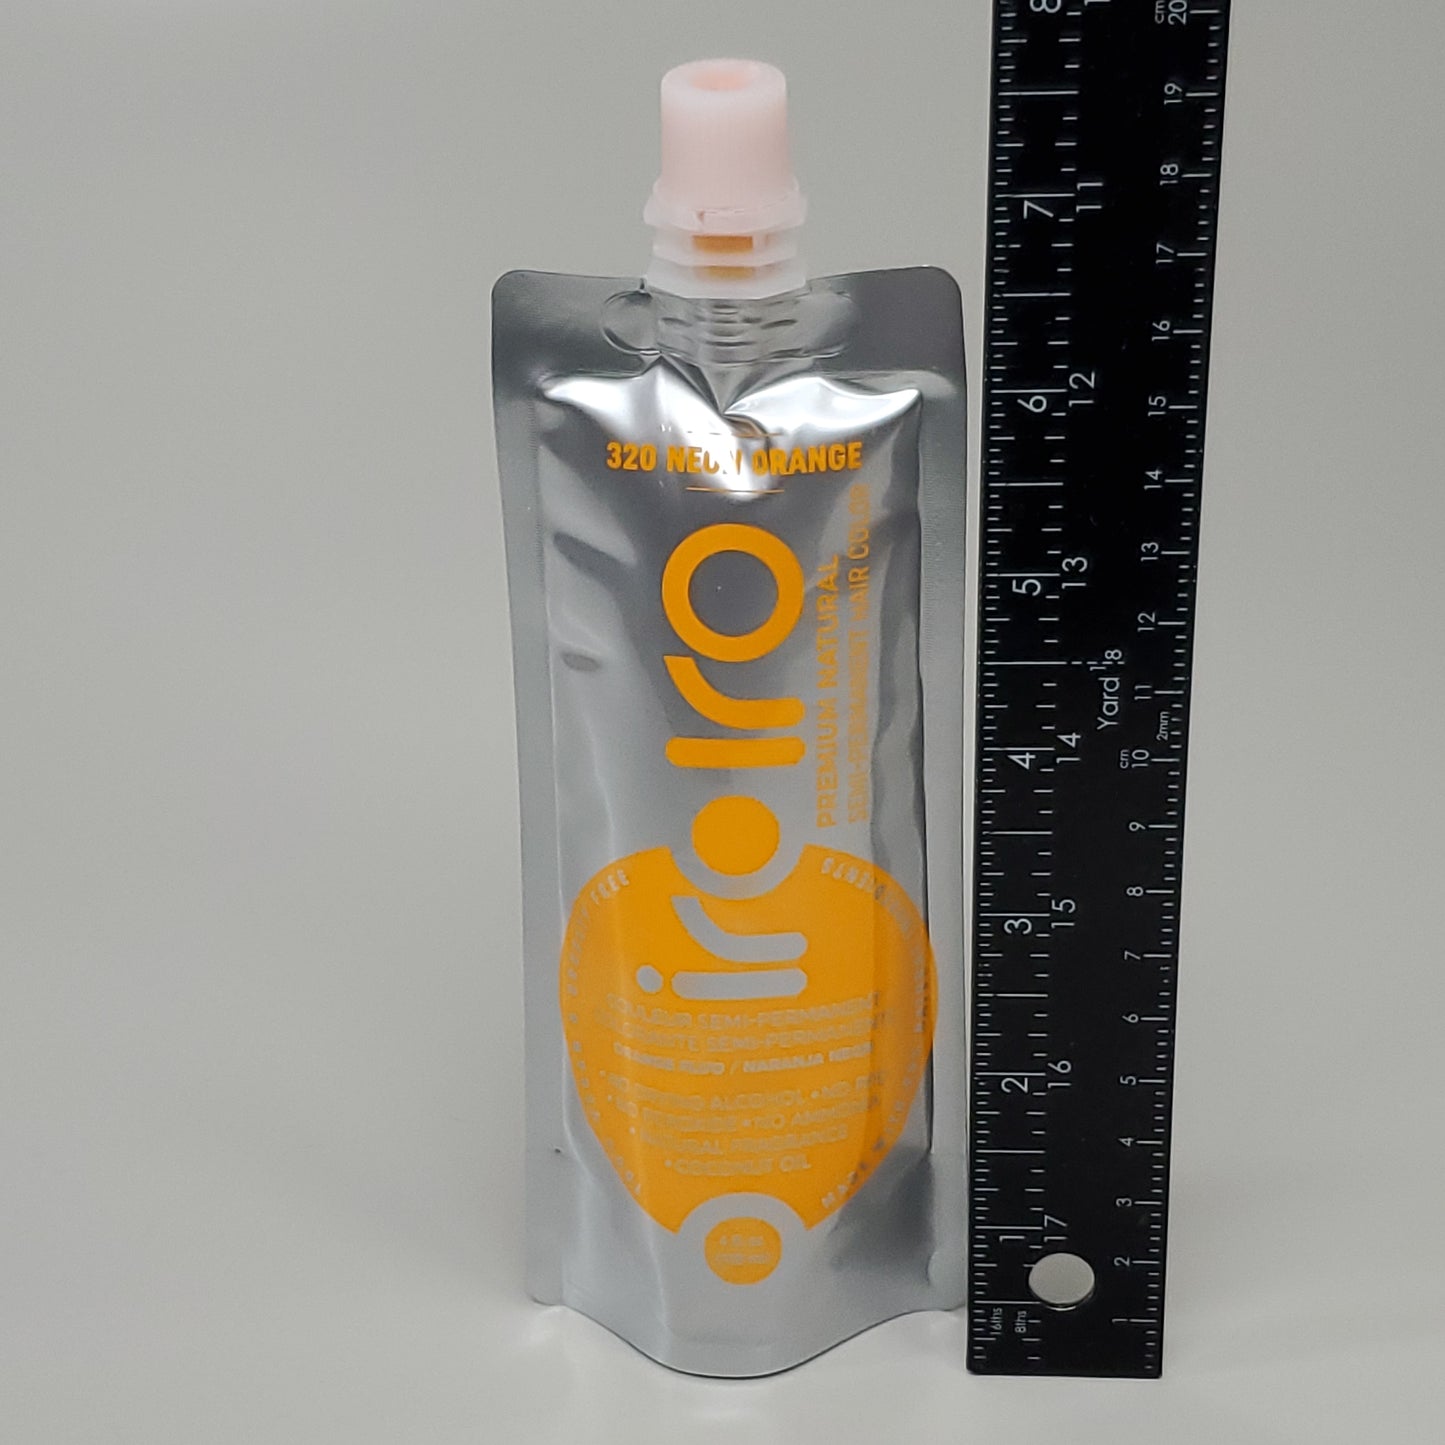 IROIRO 12 PK! Premium Natural 320-Neon Orange Semi Permanent Hair Color 4 fl oz (New)